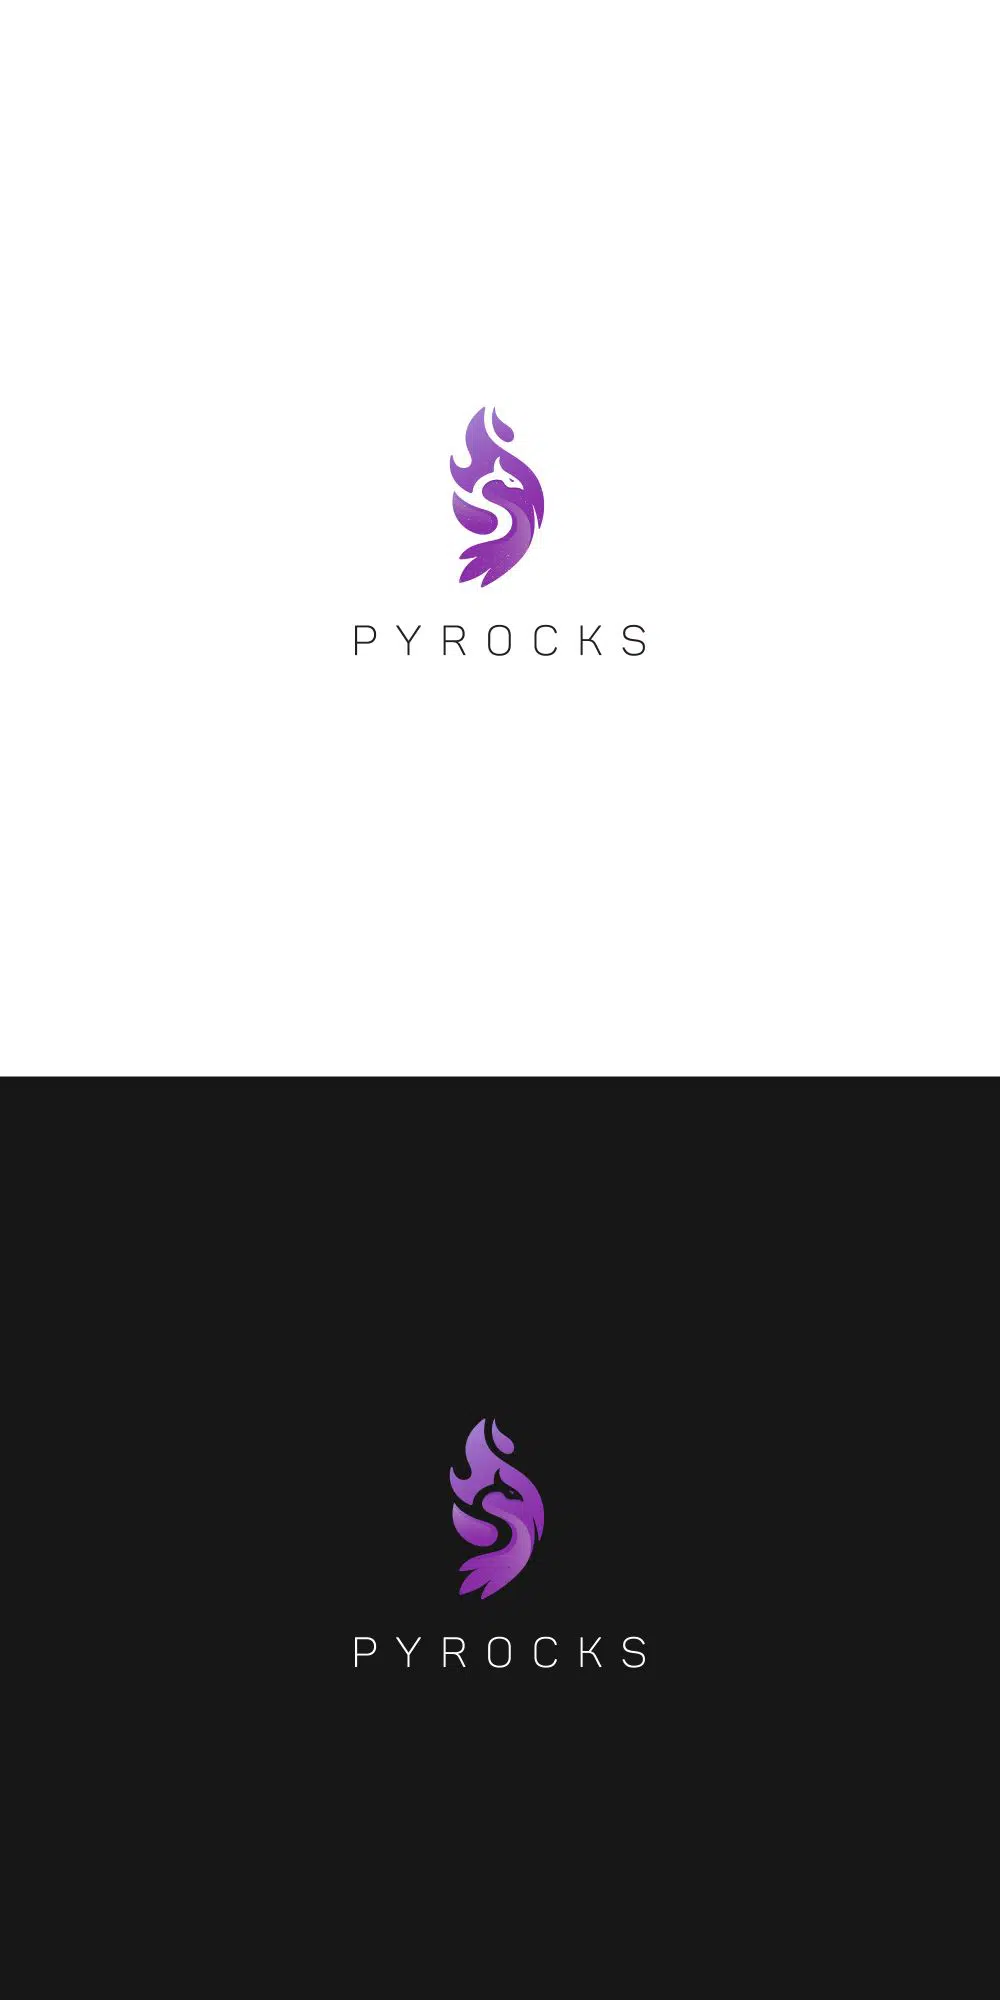 Pyrocks